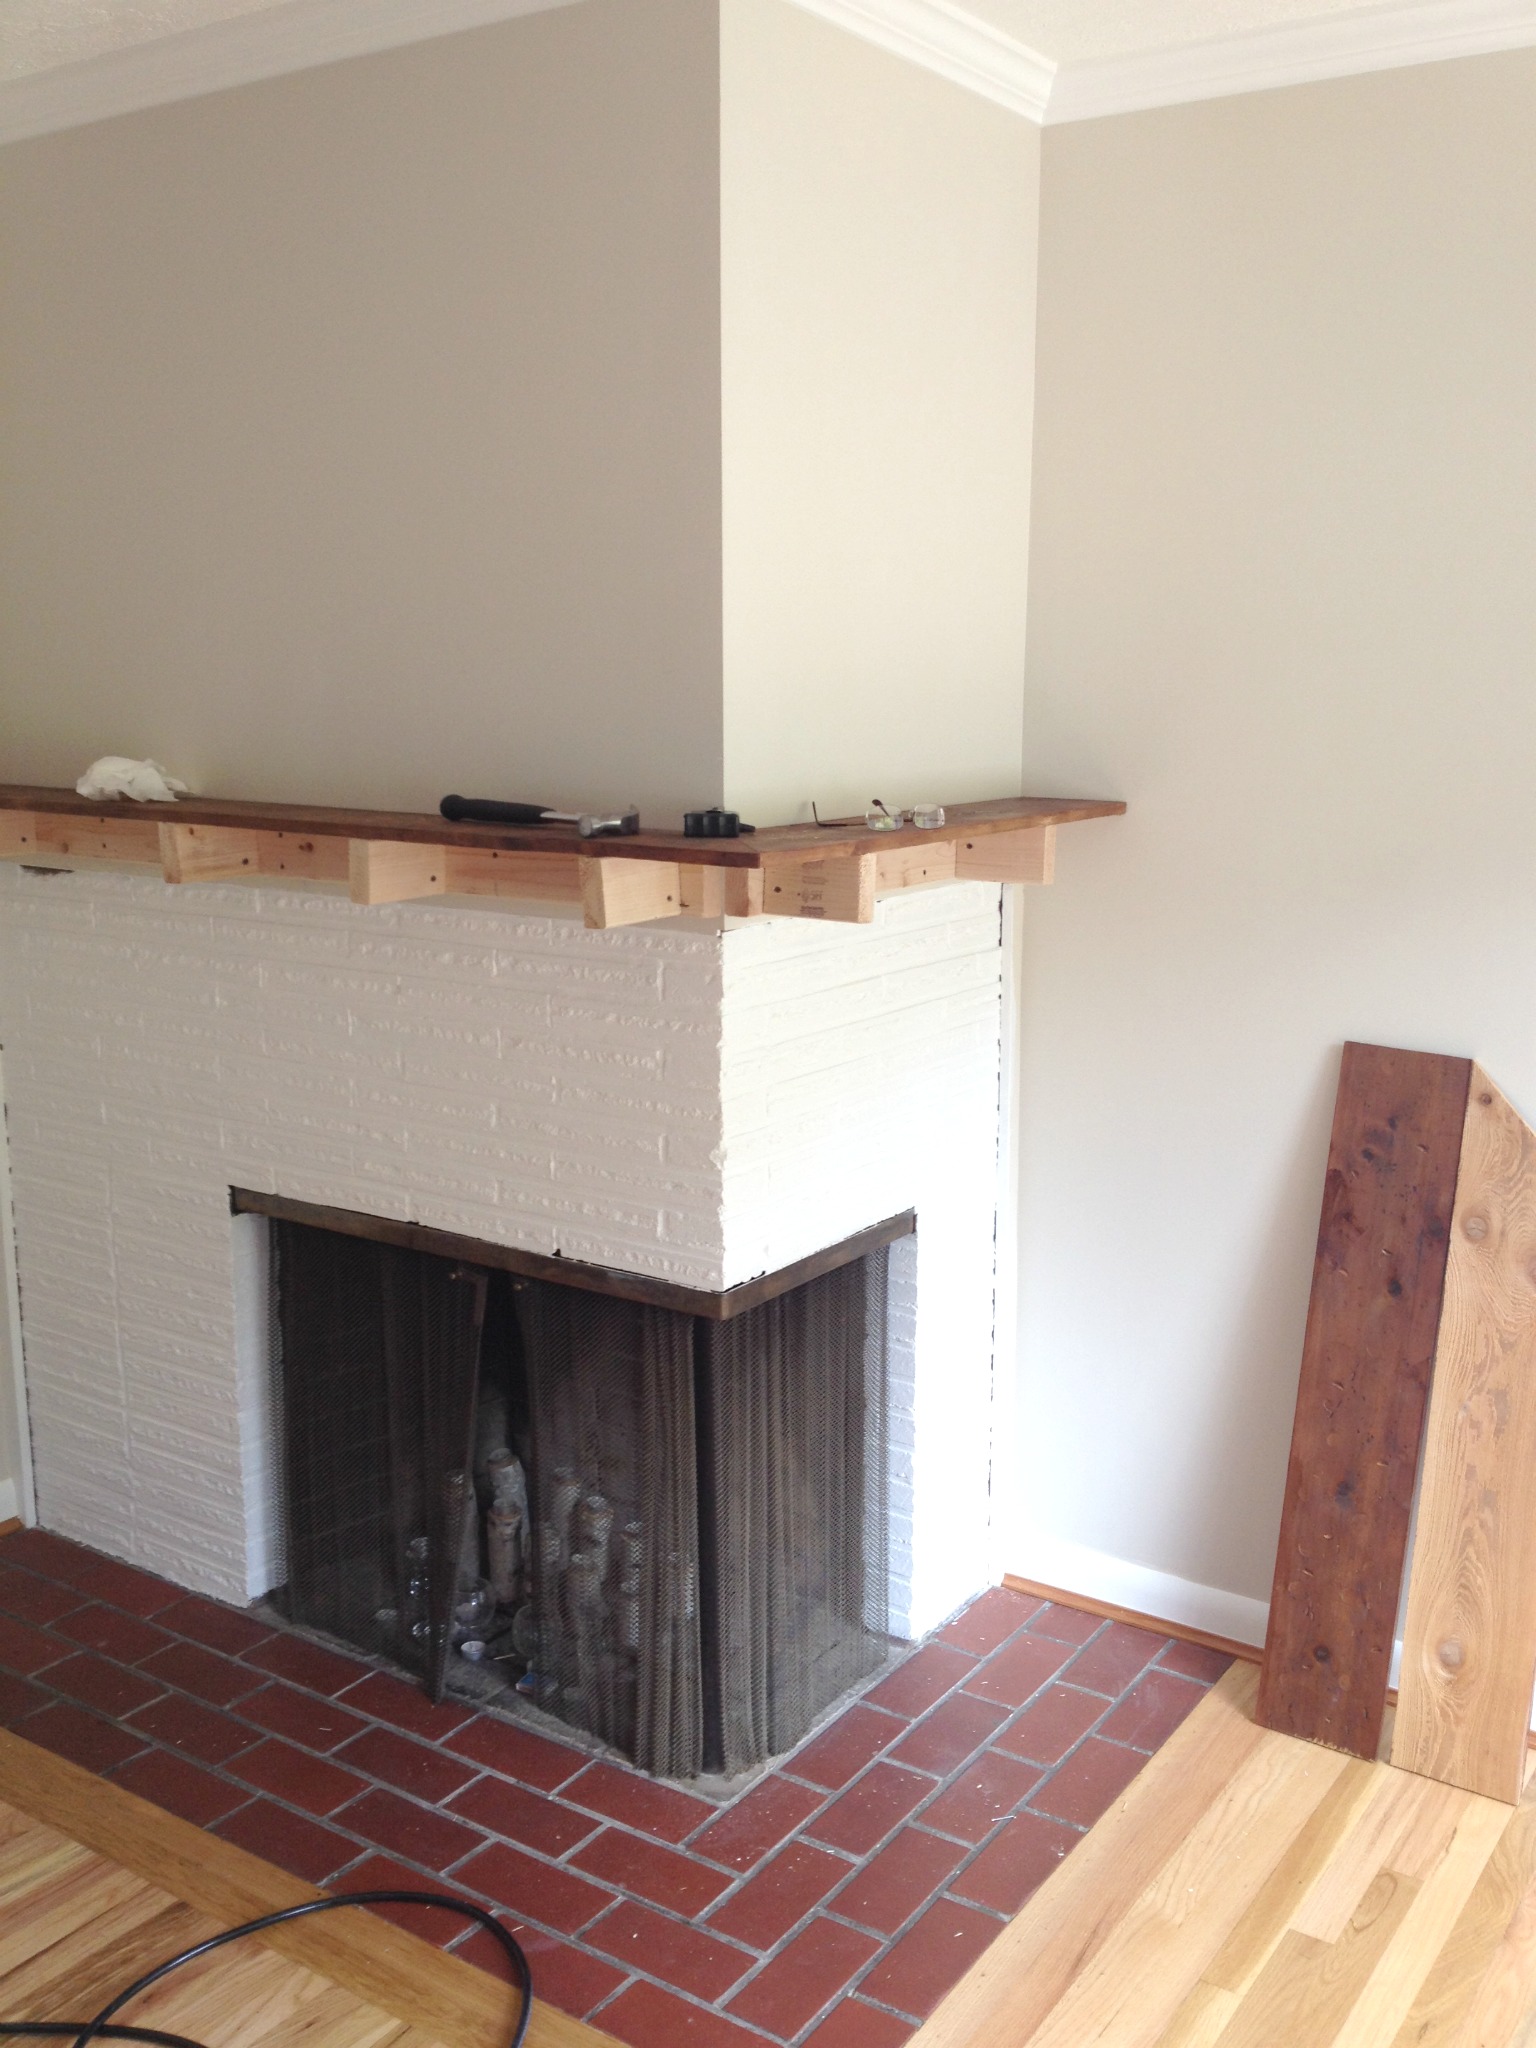 Fireplace mantel build